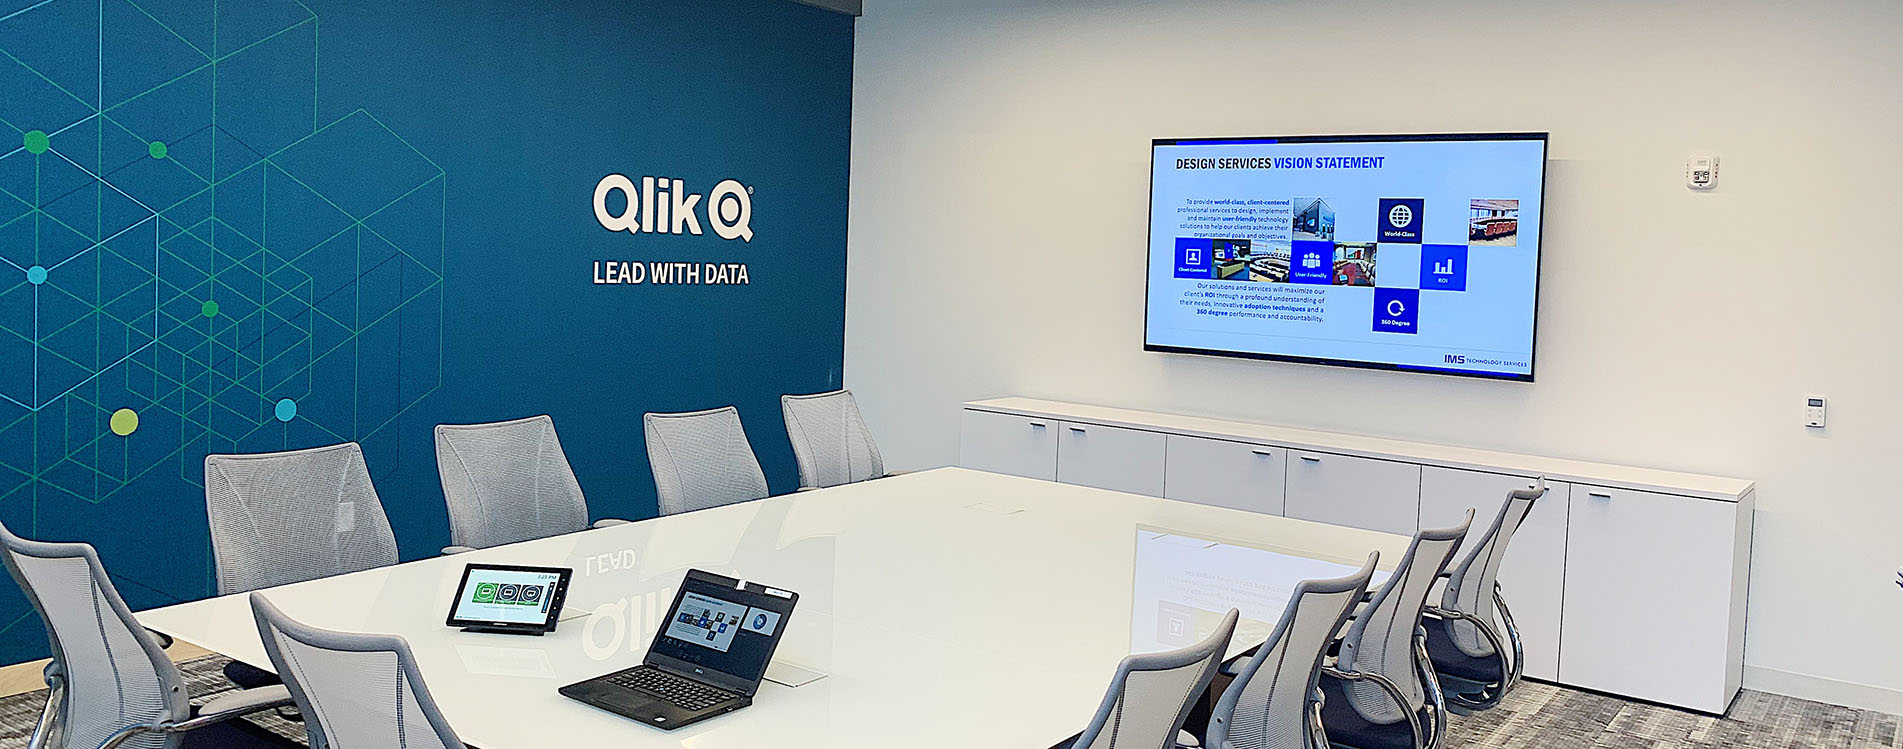 Case Study - Qlik Corporate Headquarters